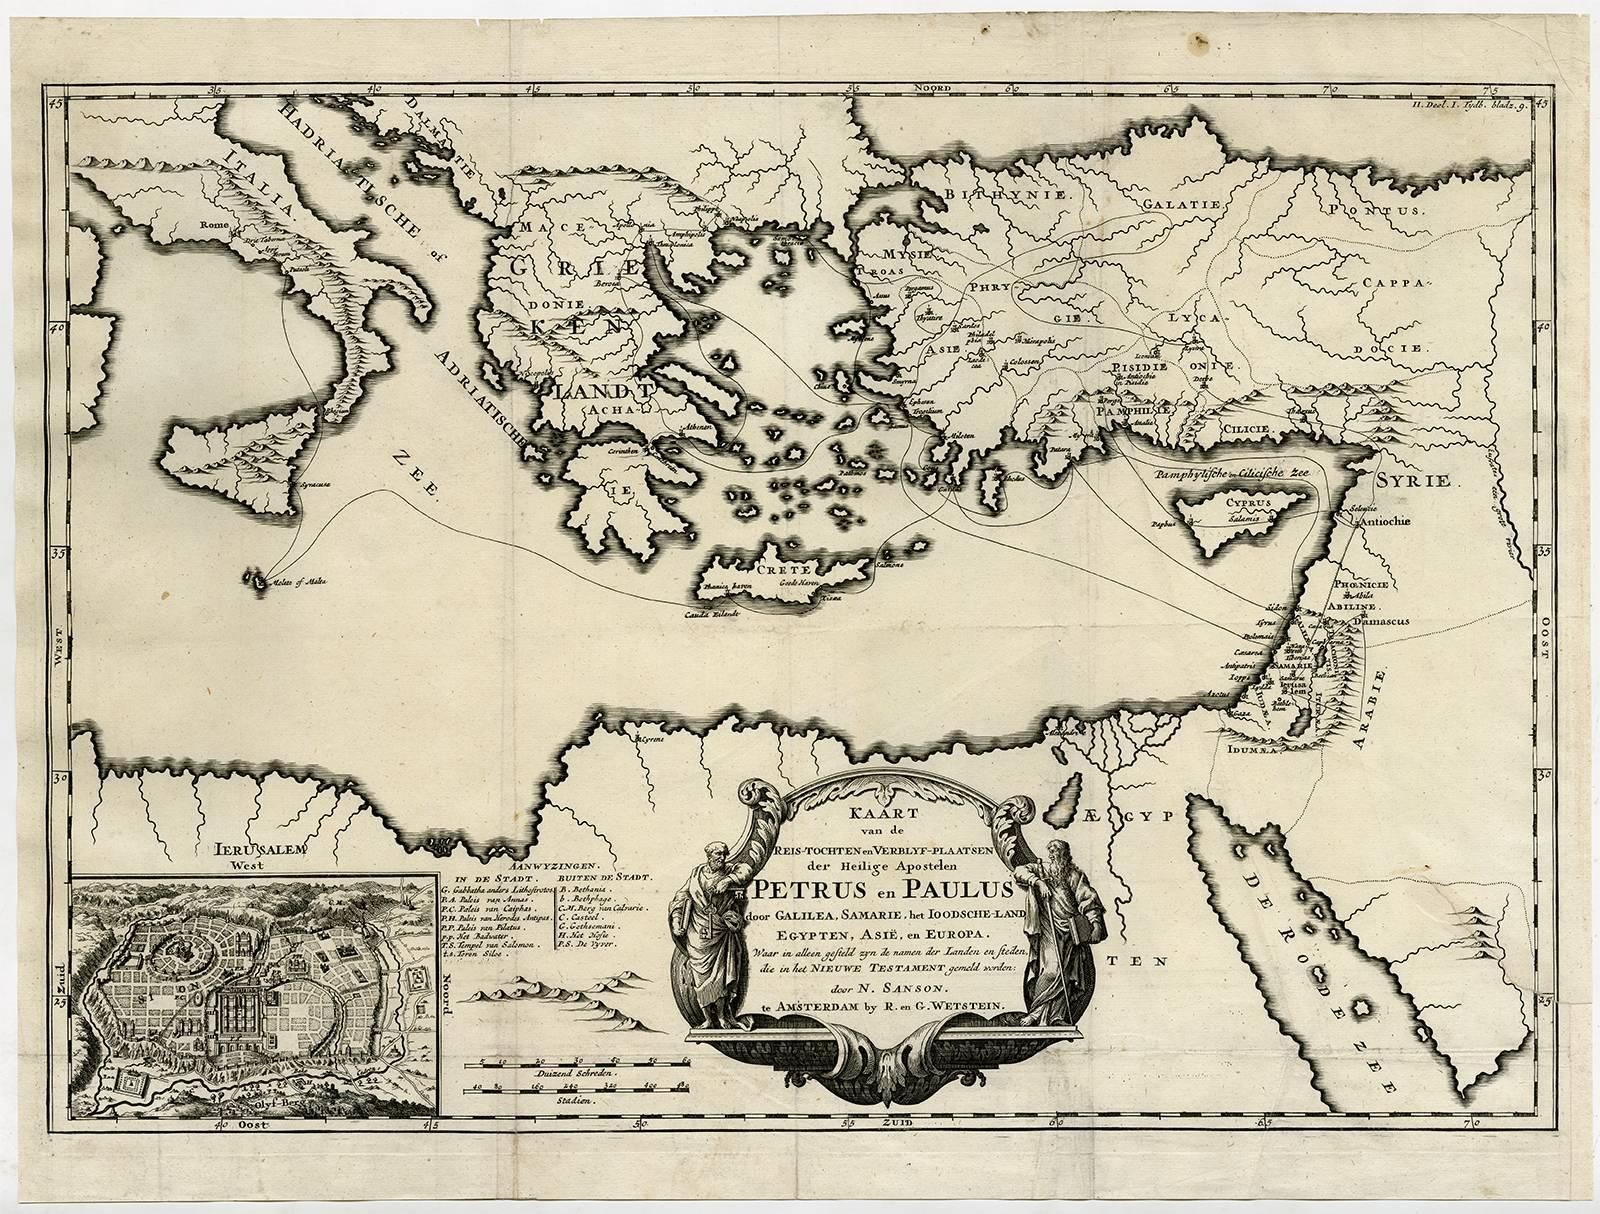 Nicholas Sanson d'Abbeville Print - Kaart van de reis-tochten en verblyf-plaatsen der Heilige apostelen Petrus [...]